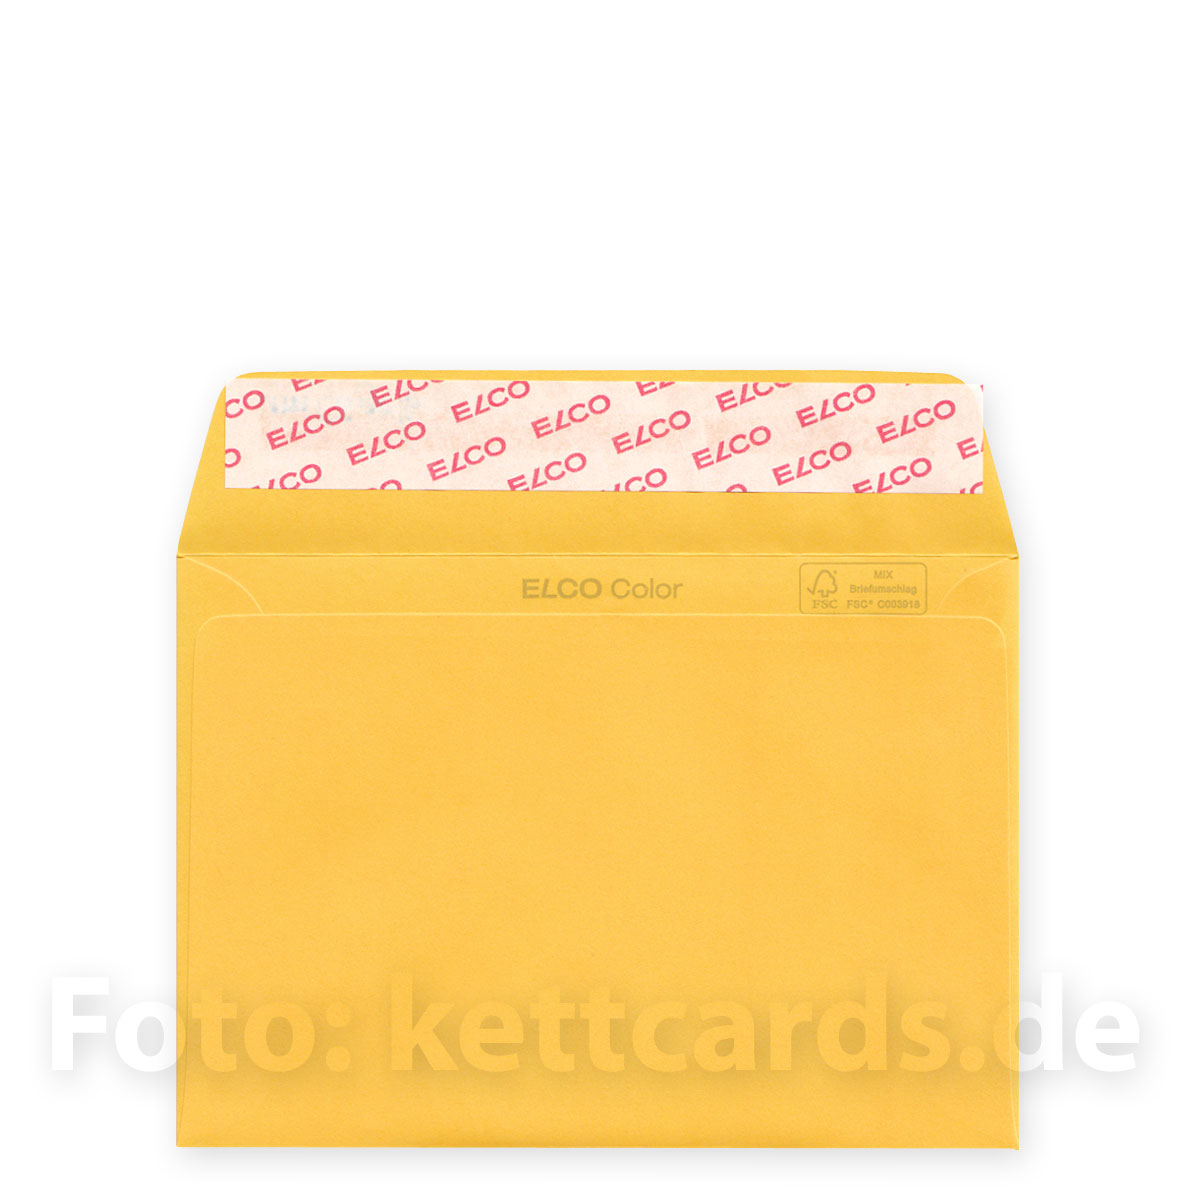 gelbe Umschläge DIN C6 haftklebend, Elco office color goldgelb